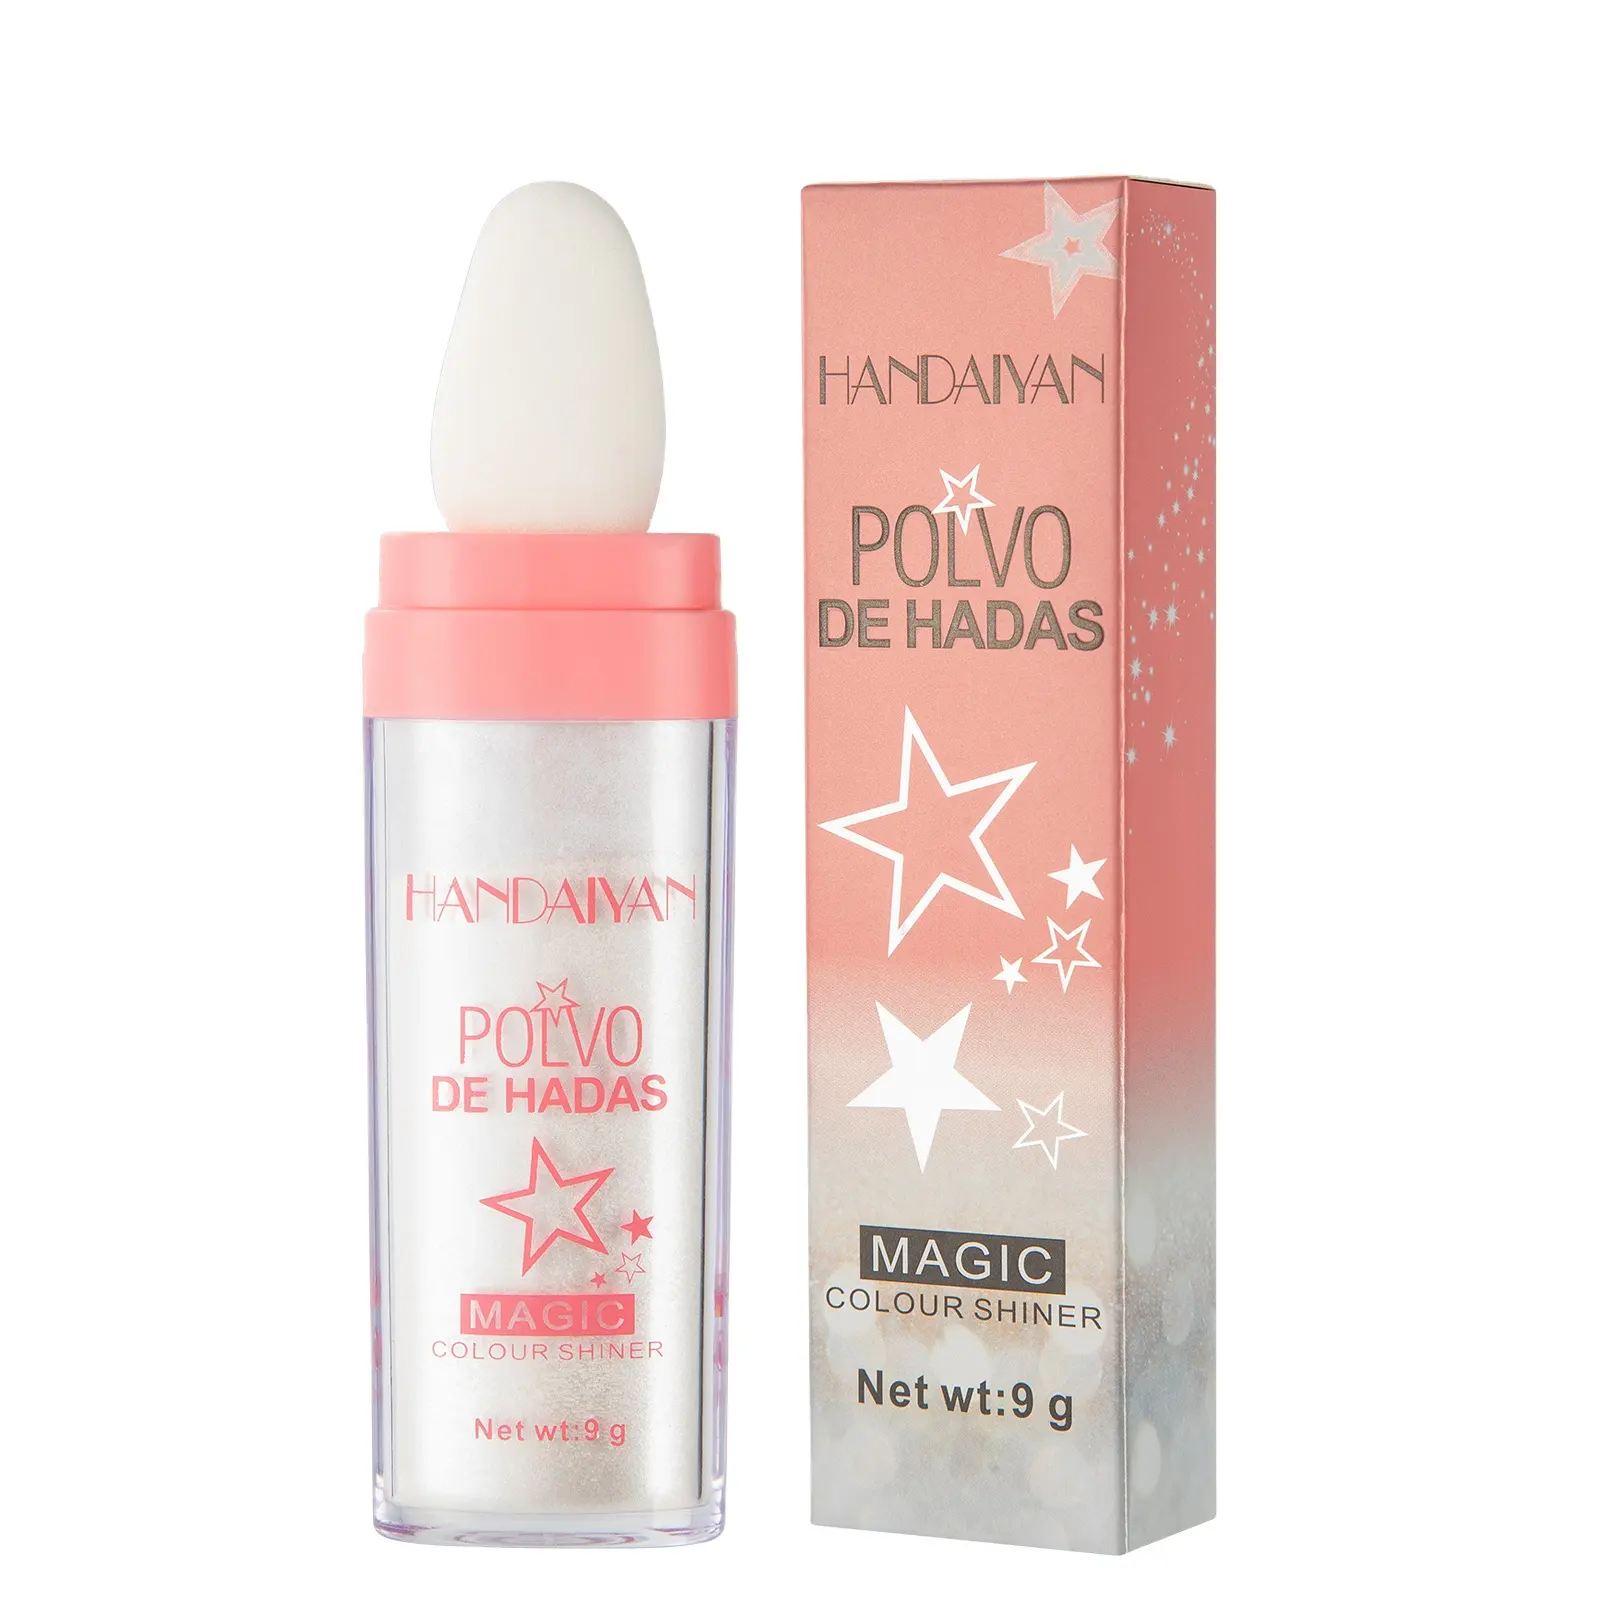 HANDAIYAN Shimmer Glitter 3 Colors Pat Powder Highlighter Face Makeup Cosmetics Polvo De Hadas Vegan